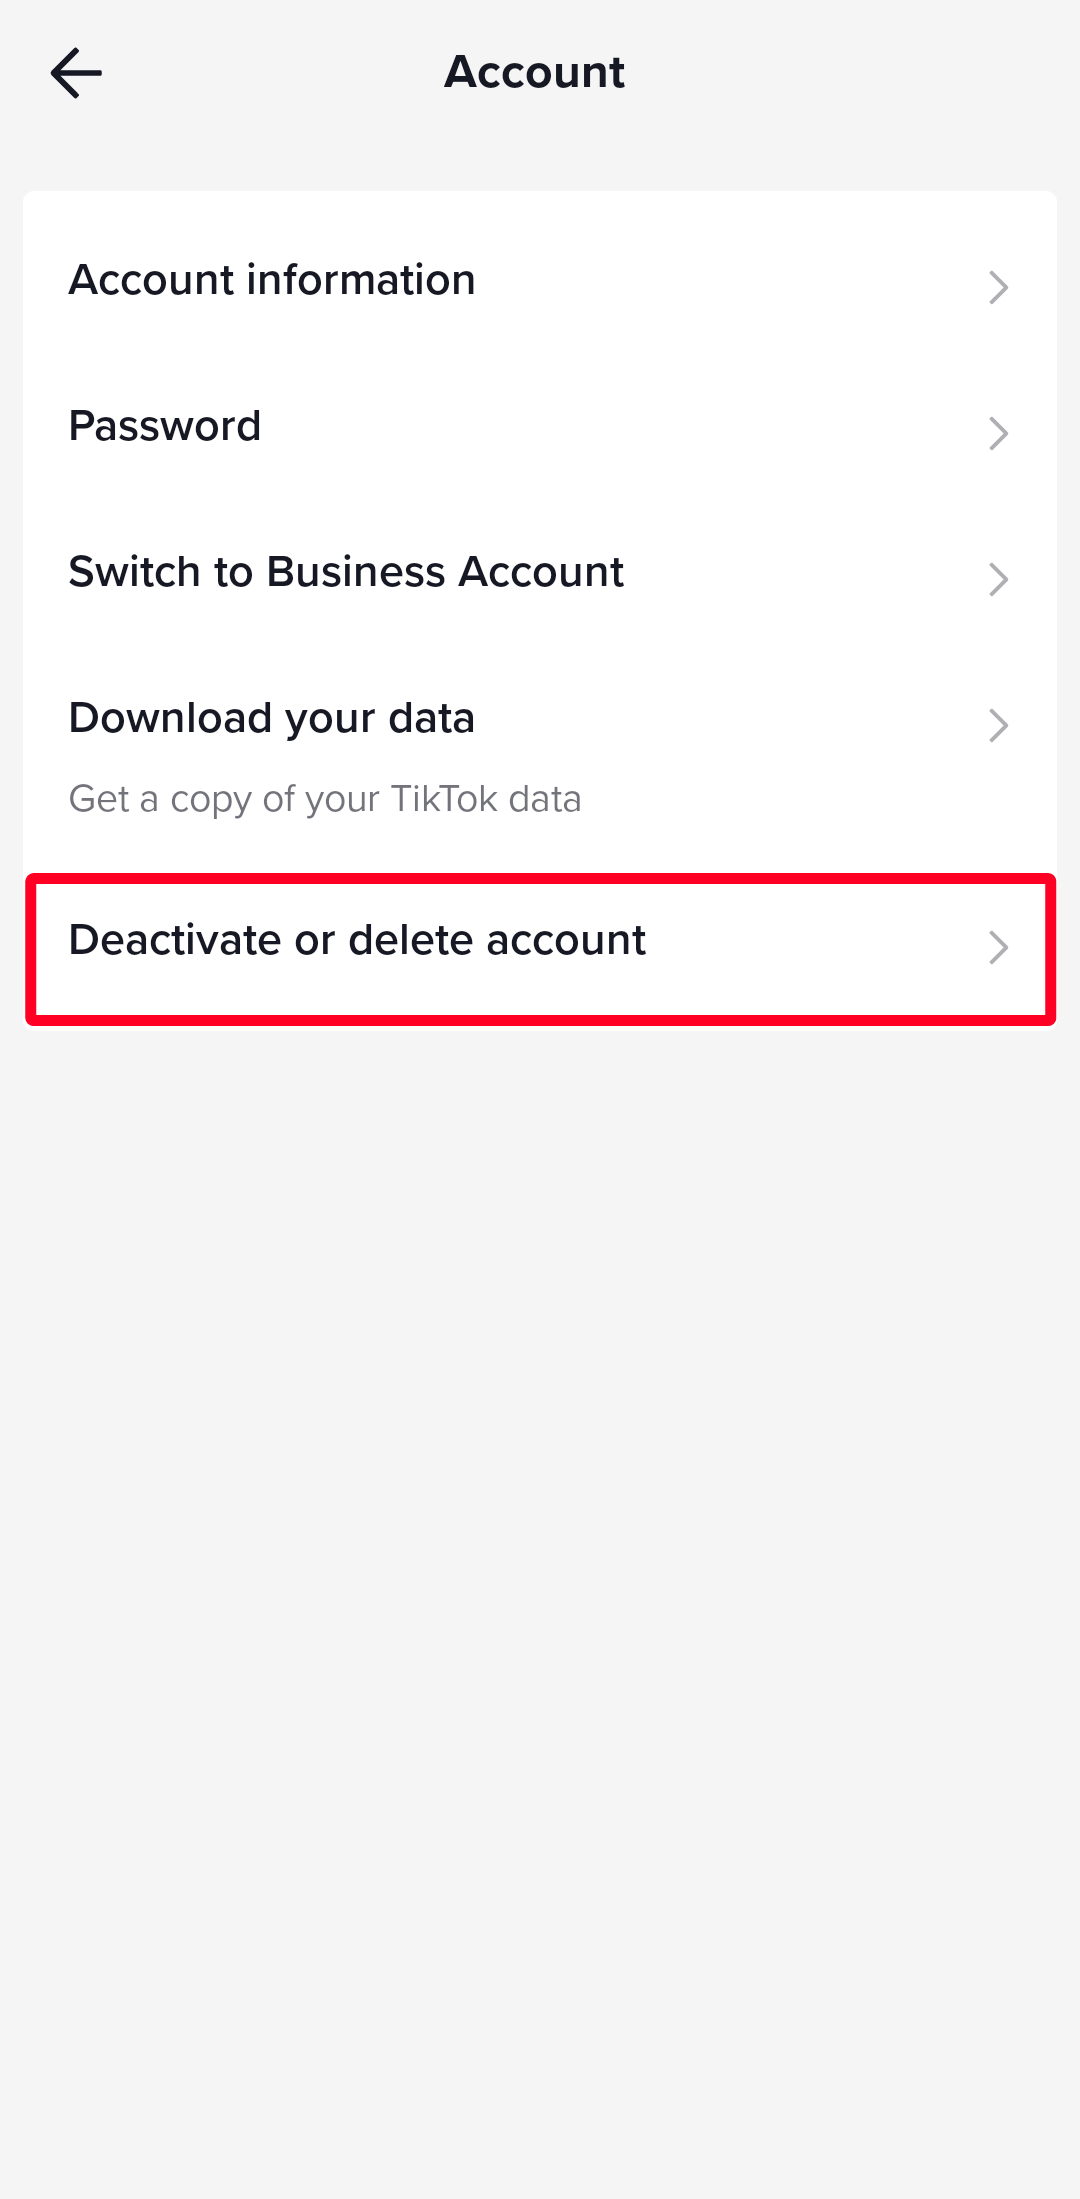 Deactivate or delete account option in TikTok Account settings menu